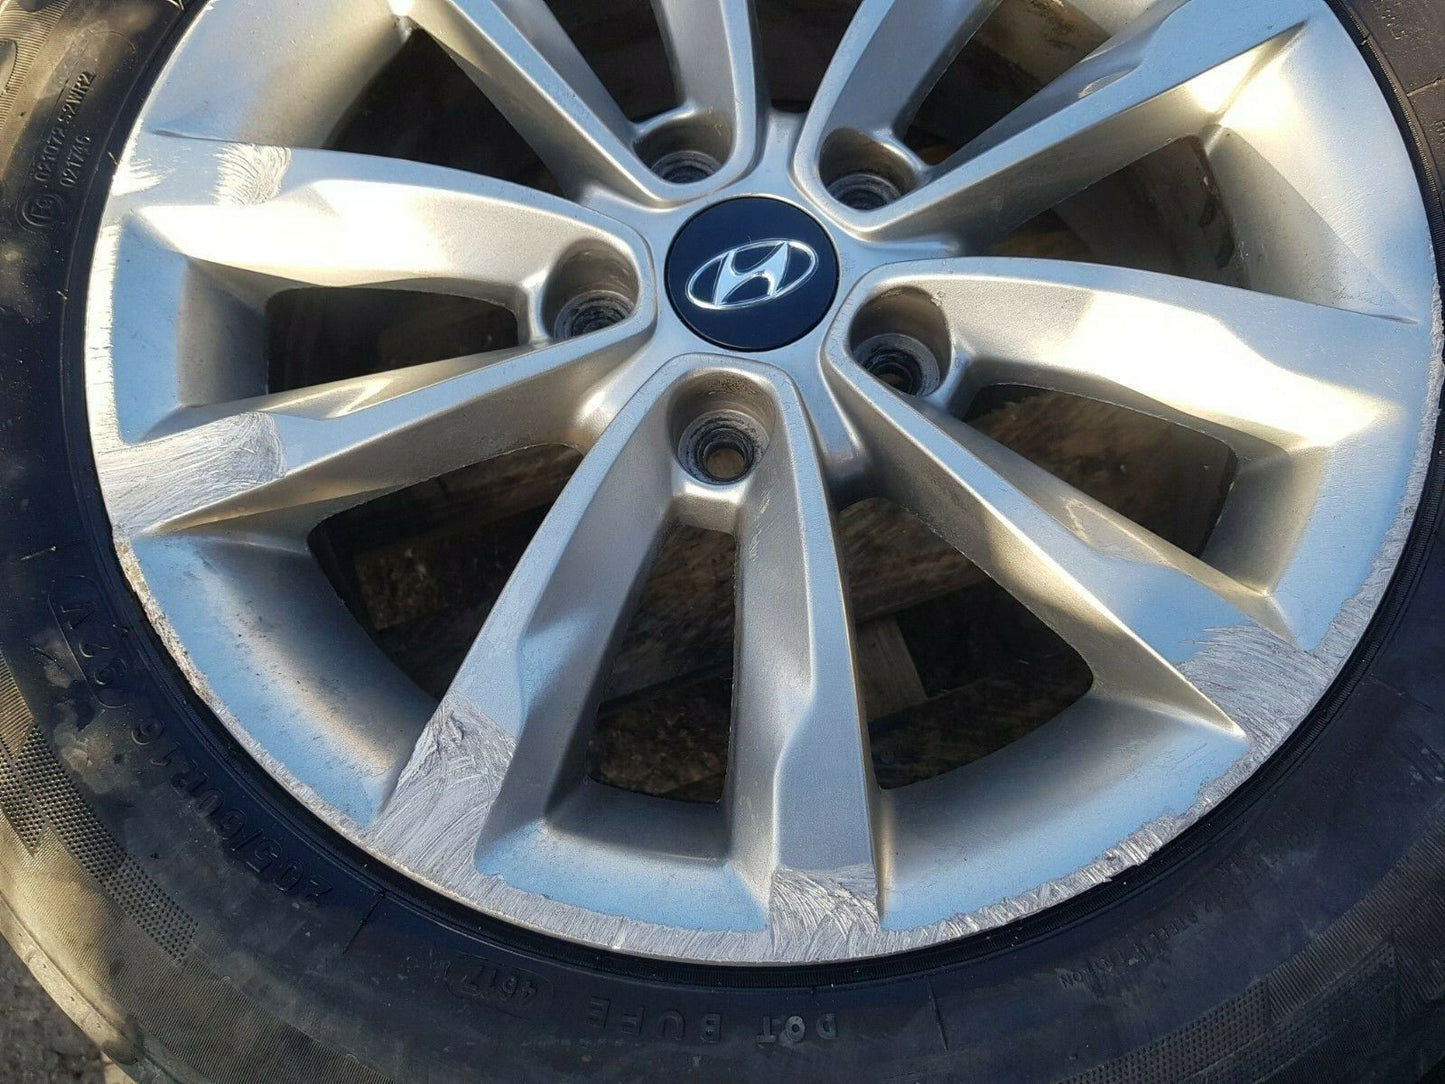 Hyundai I40 16" Genuine Alloy Wheel 205/60/16 2015 - 2018